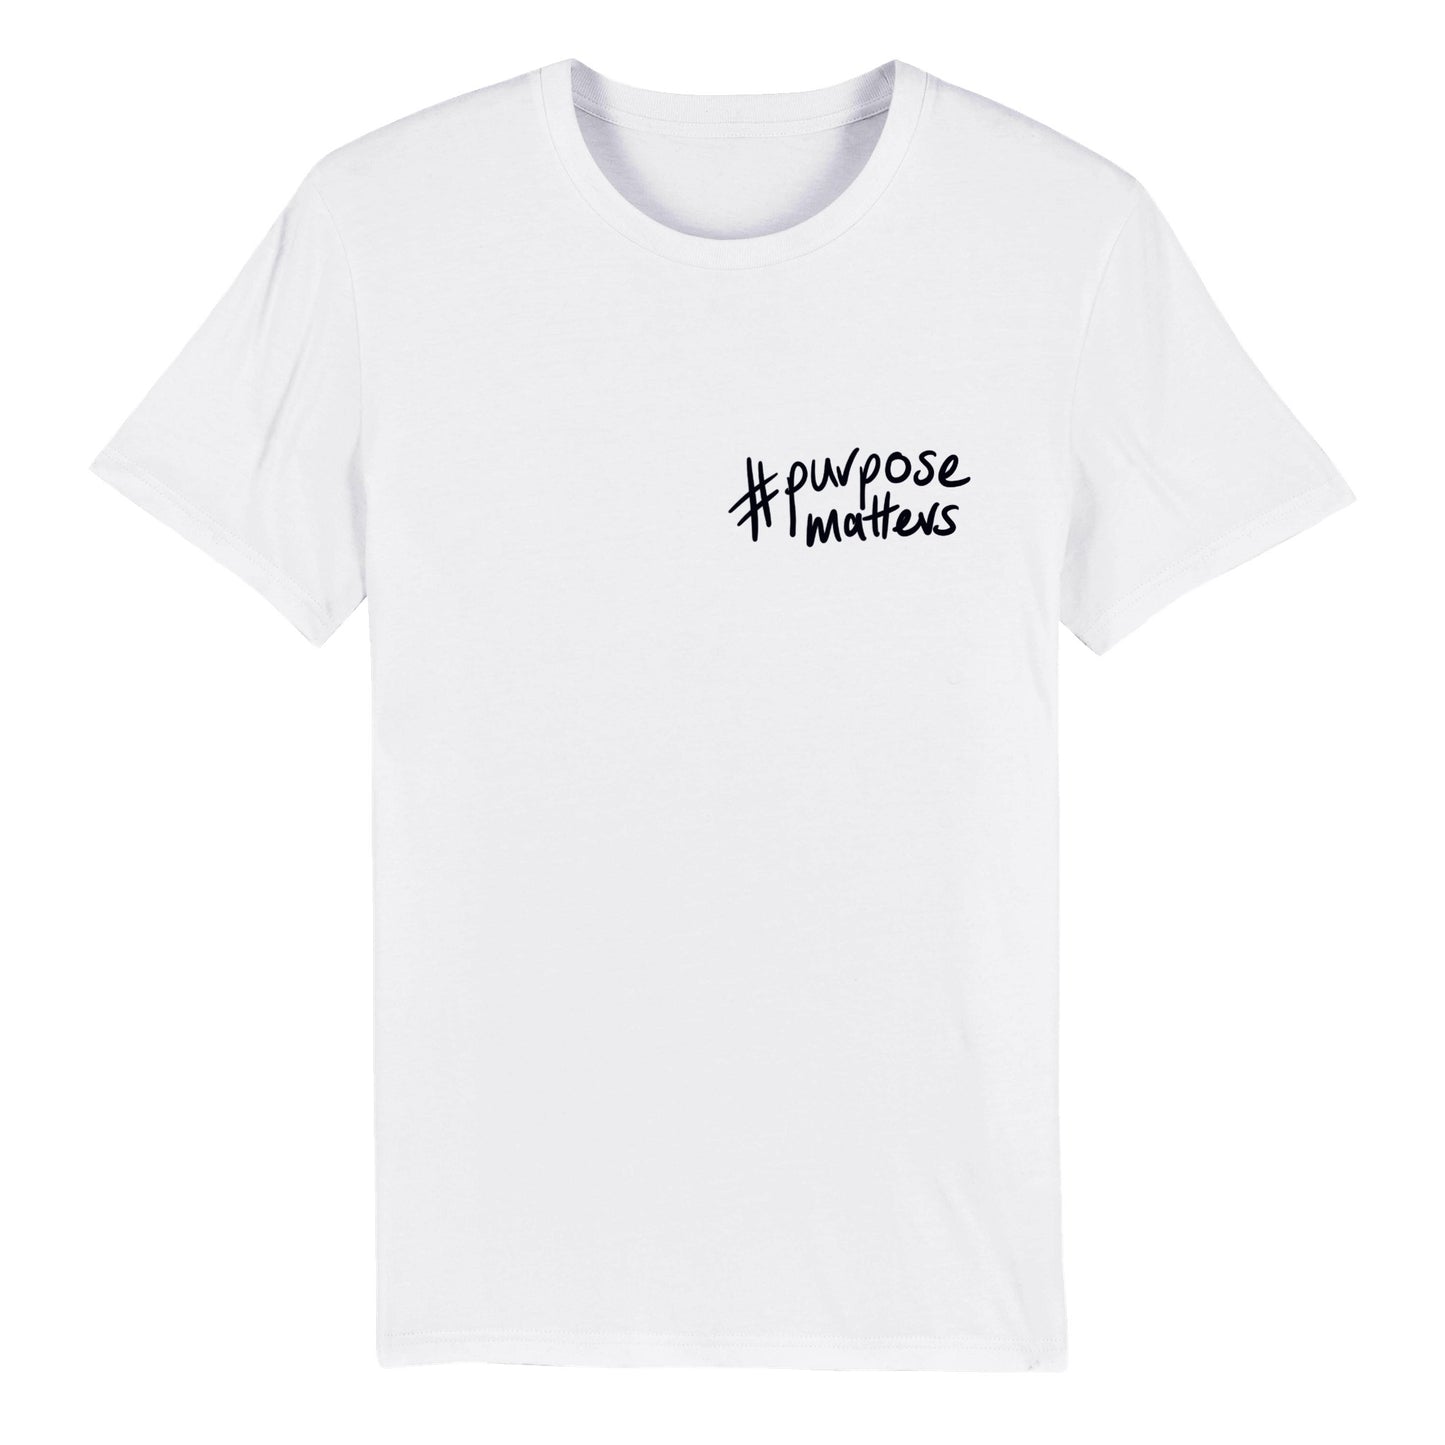 '#purposematters' black on white pocket print Organic Unisex Crewneck T-shirt. Free shipping